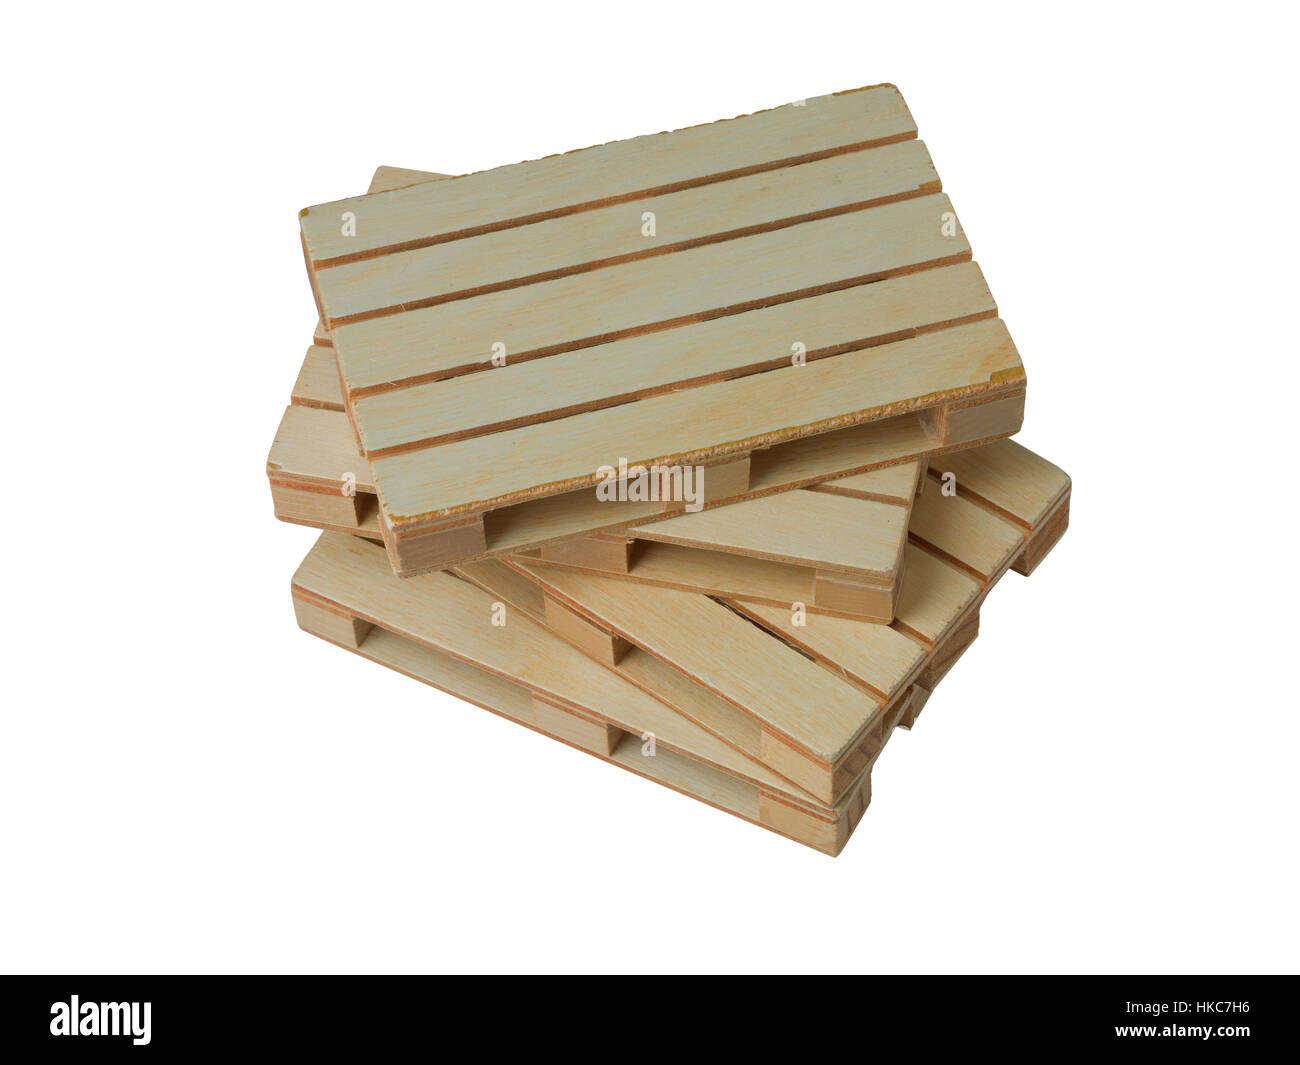 Tarimas de madera fotografías e imágenes de alta resolución - Alamy